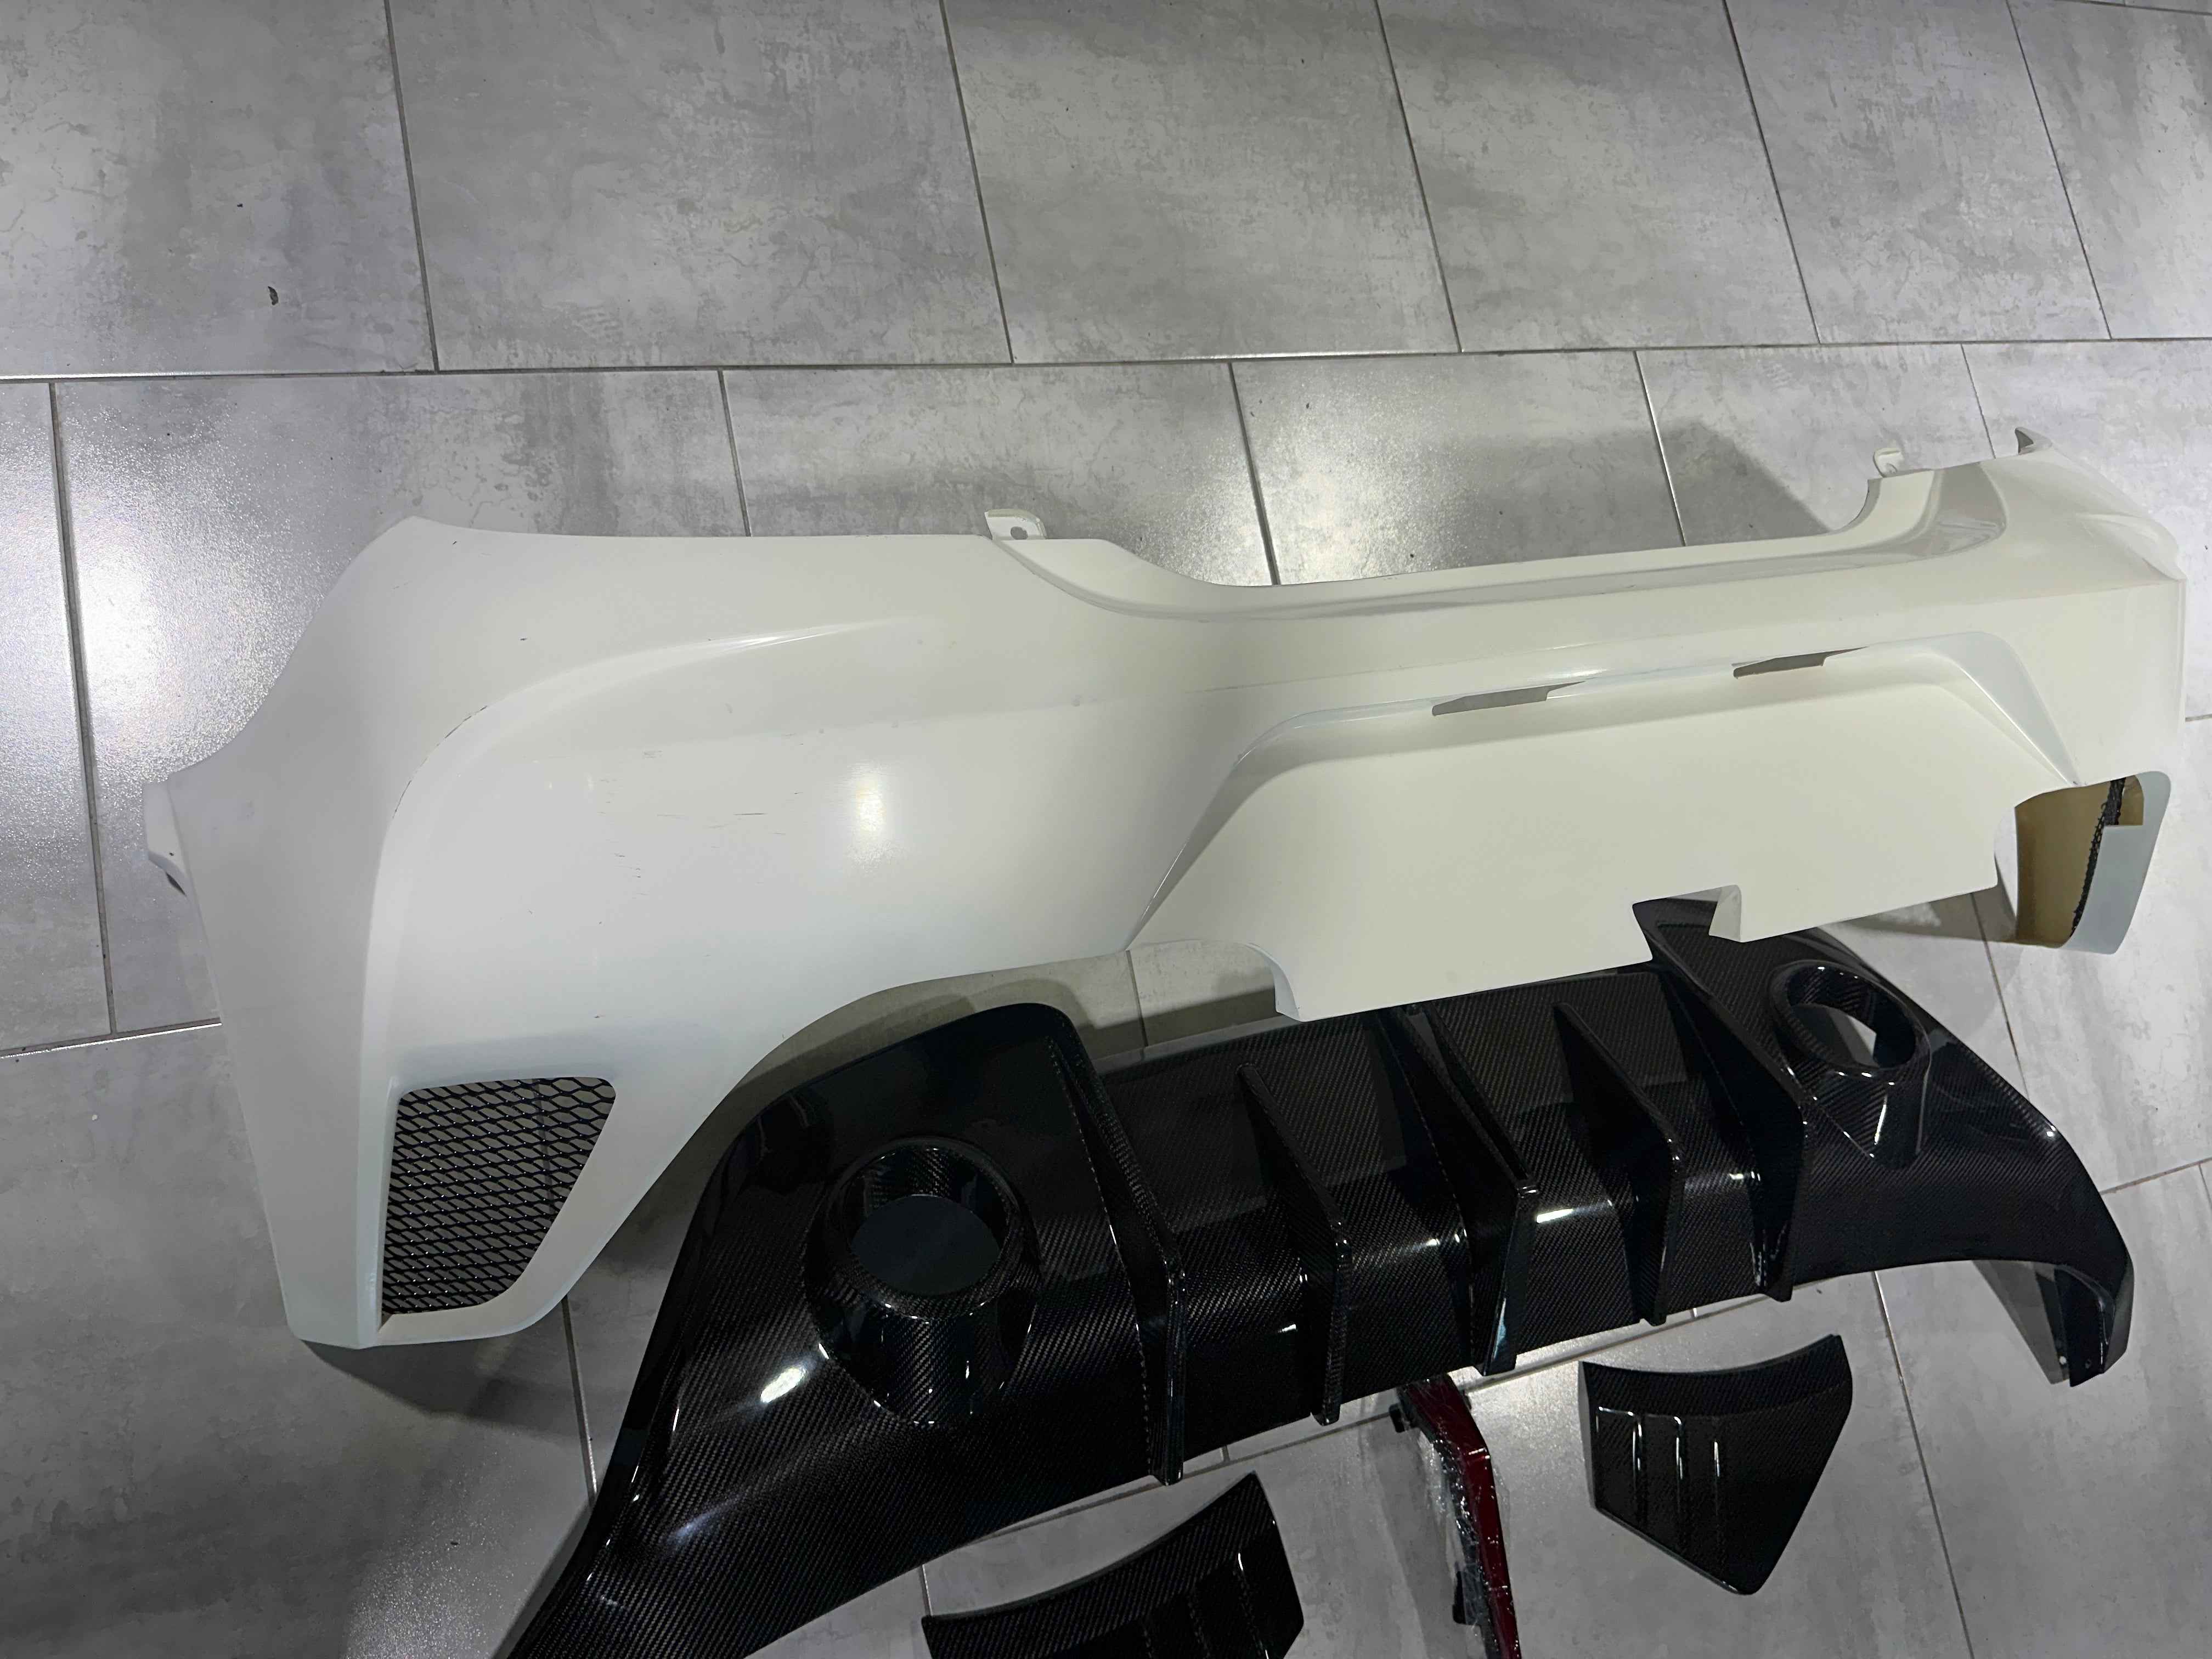 ROBOT CRAFTSMAN "SHINNING" Narrow Body Rear Bumper & Diffuser For Toyota GR86 Subaru BRZ